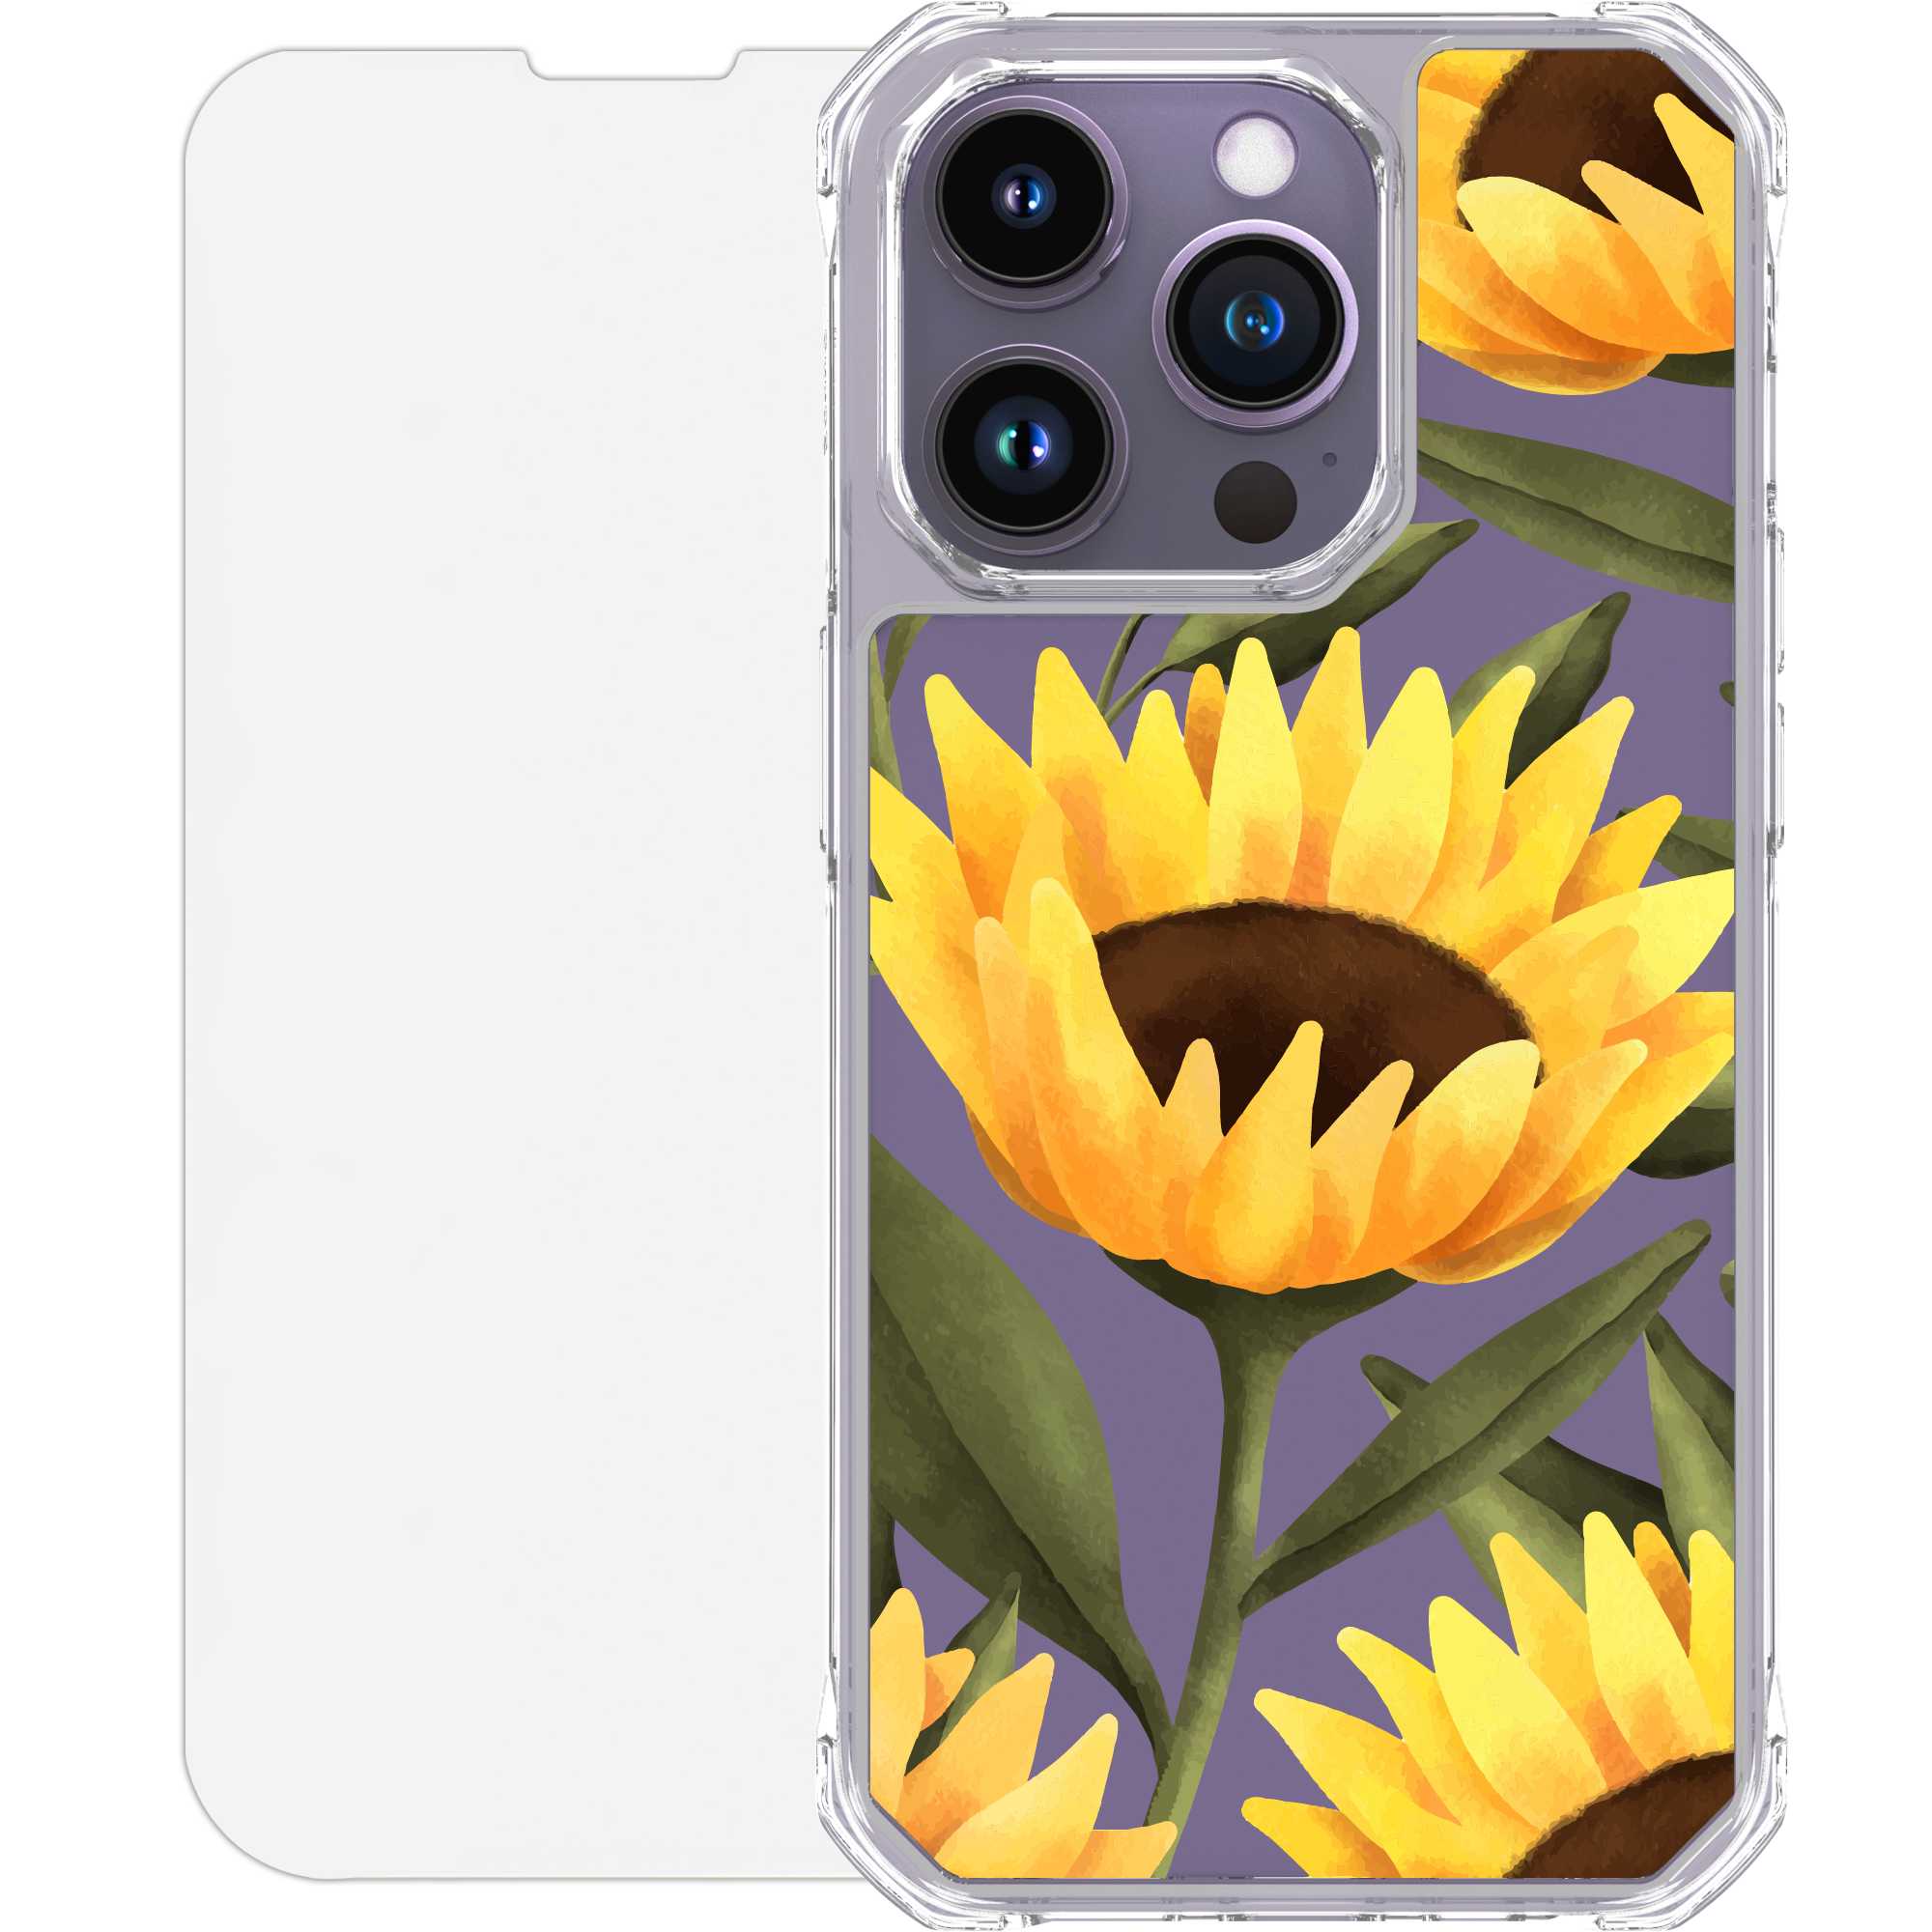 Scooch CrystalCase for iPhone 14 Pro BloomingSunflowers Scooch CrystalCase